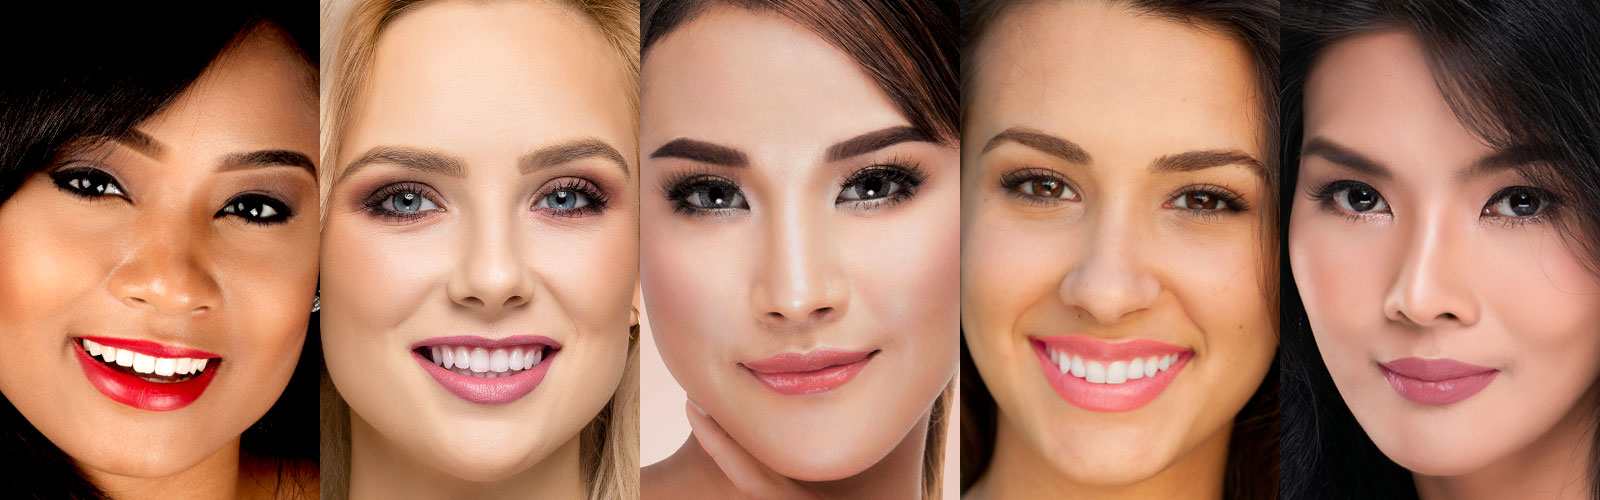 Permanent makeup for women